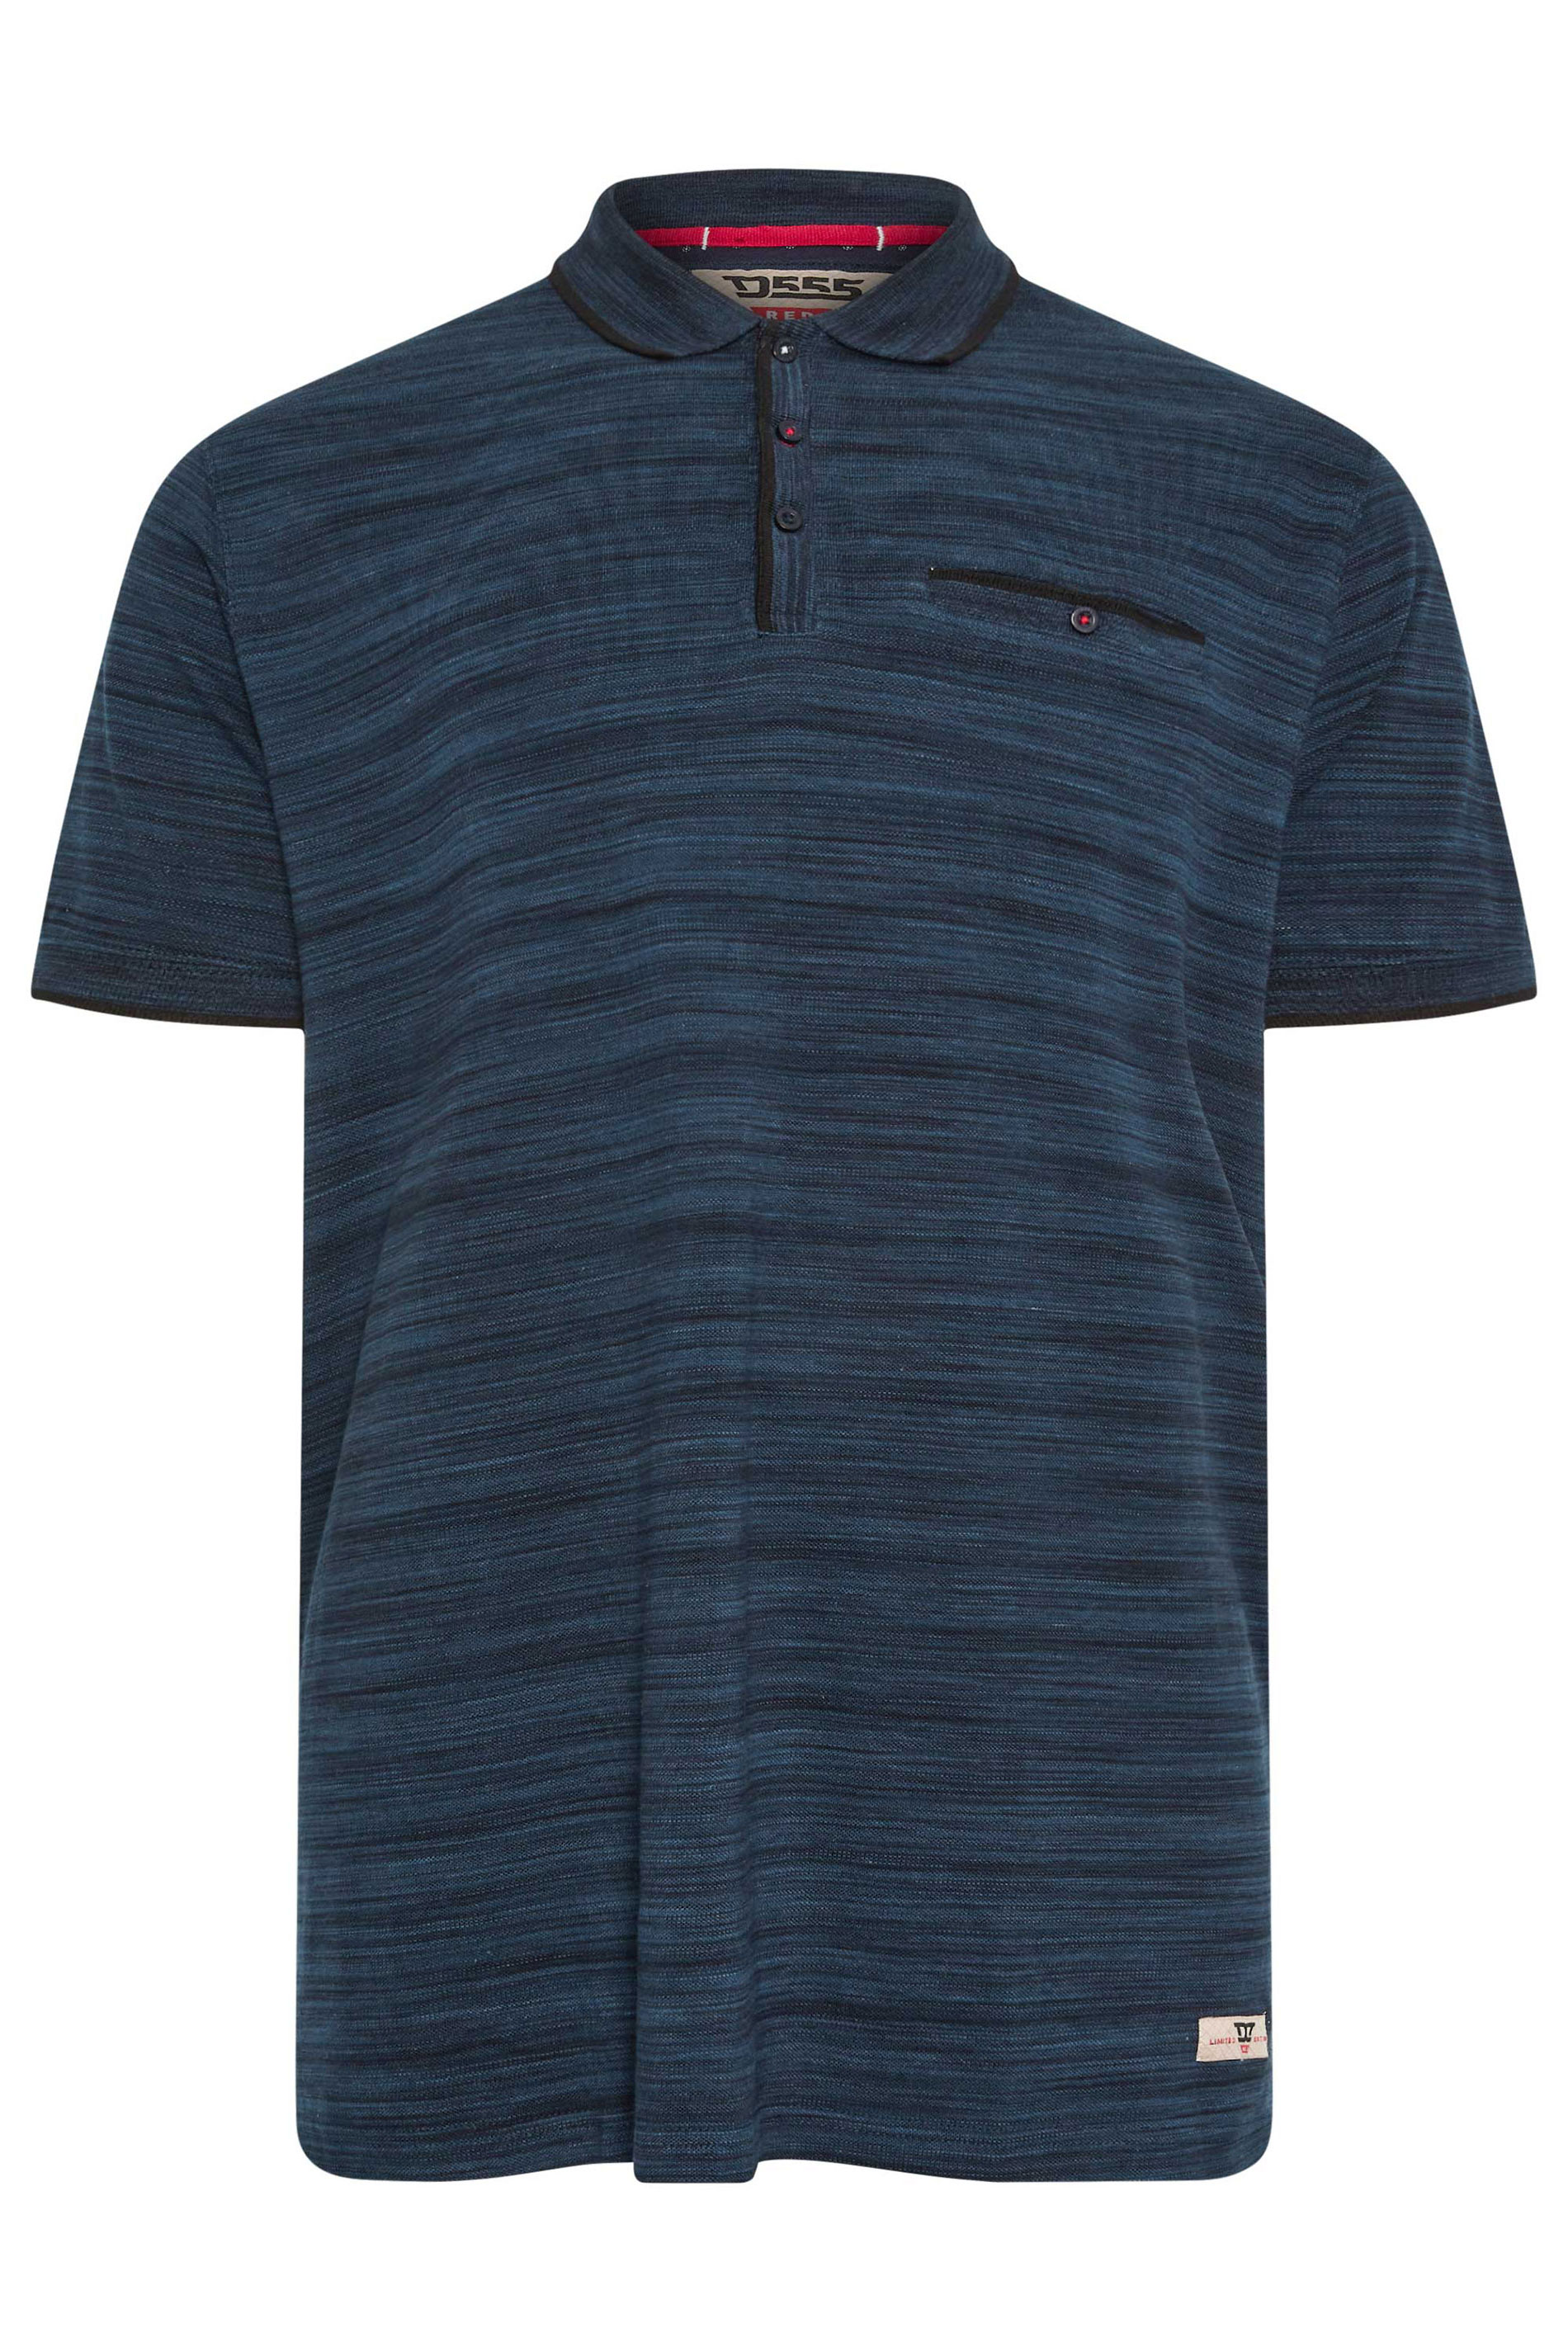 D555 Big & Tall Navy Blue Pique Pocket Polo Shirt | BadRhino 3